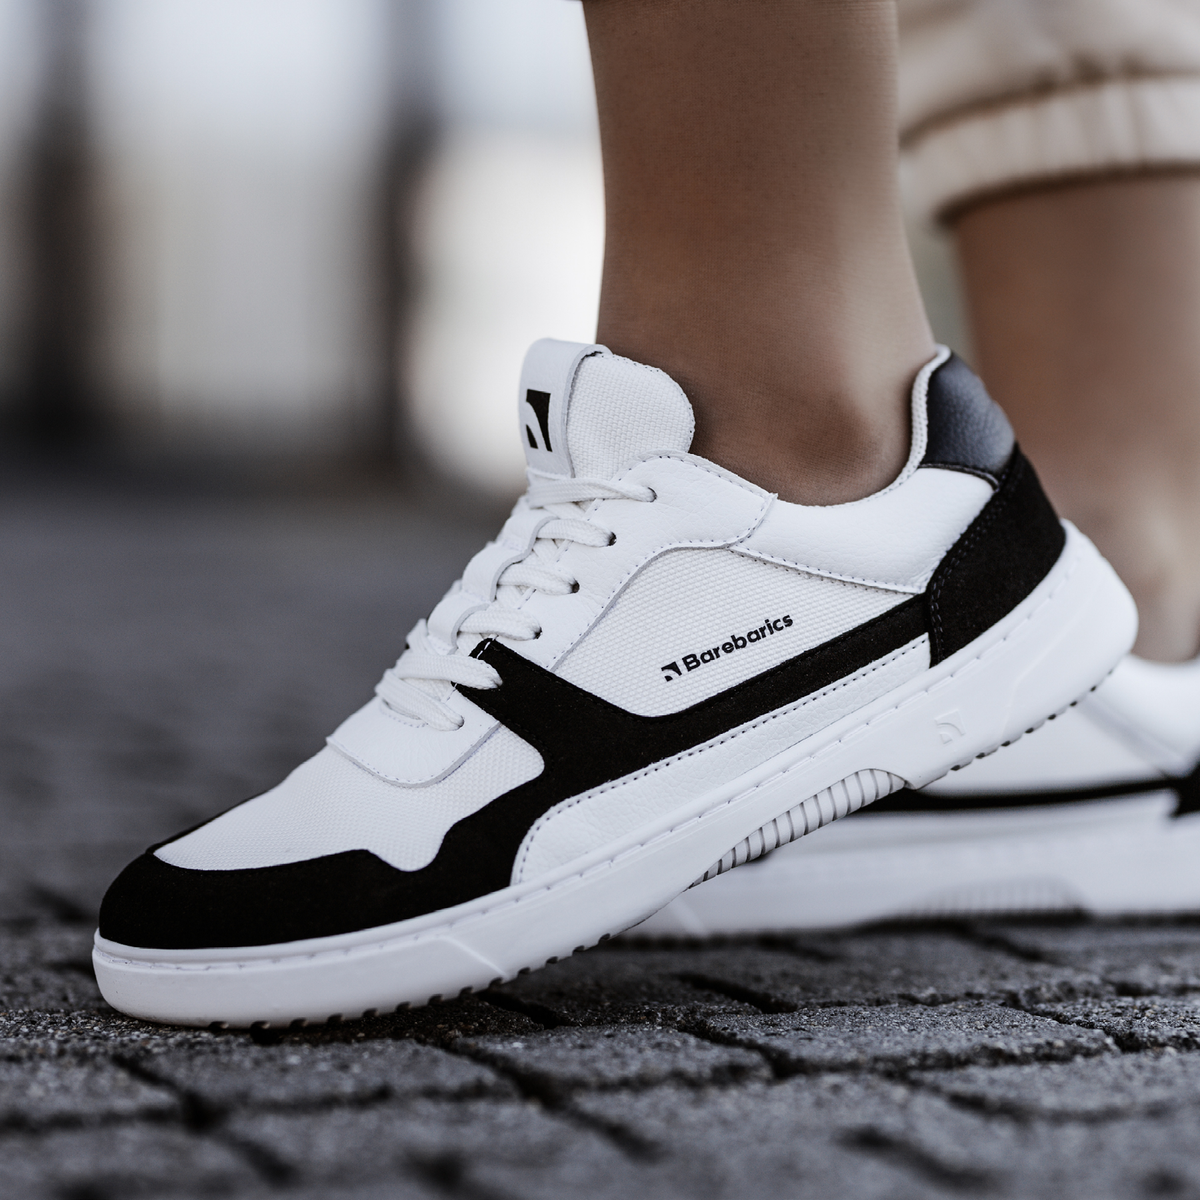 Barefoot Sneakers Barebarics - Zing - White & Black 4 OzBarefoot Australia